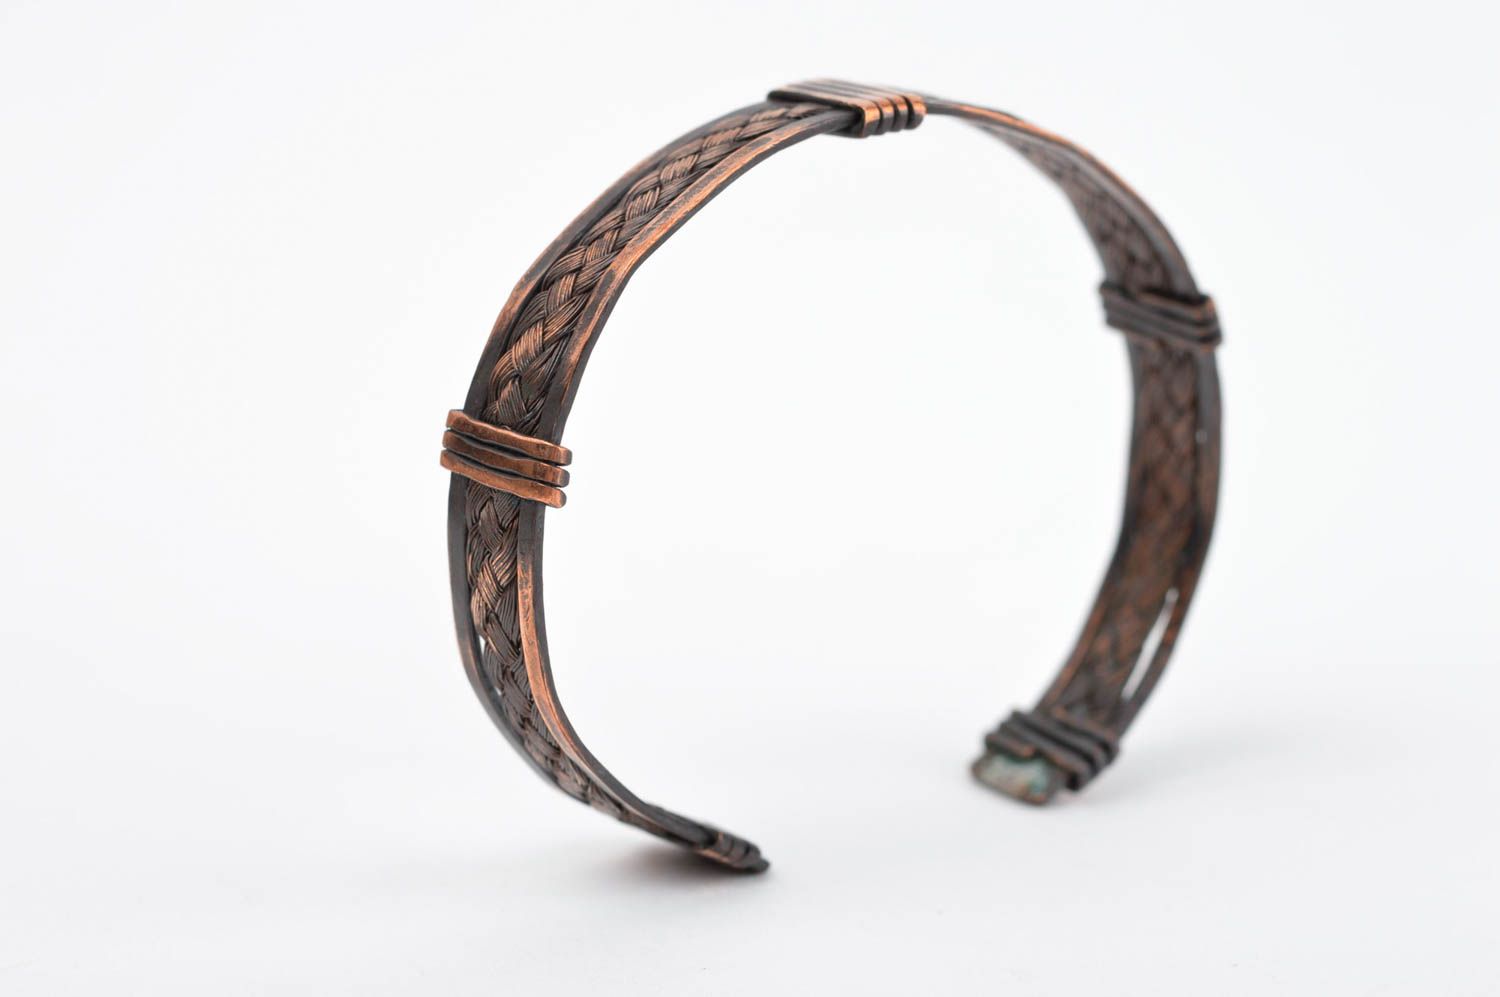 Unusual handmade wrist bracelet metal bracelet designs metal craft ideas photo 4